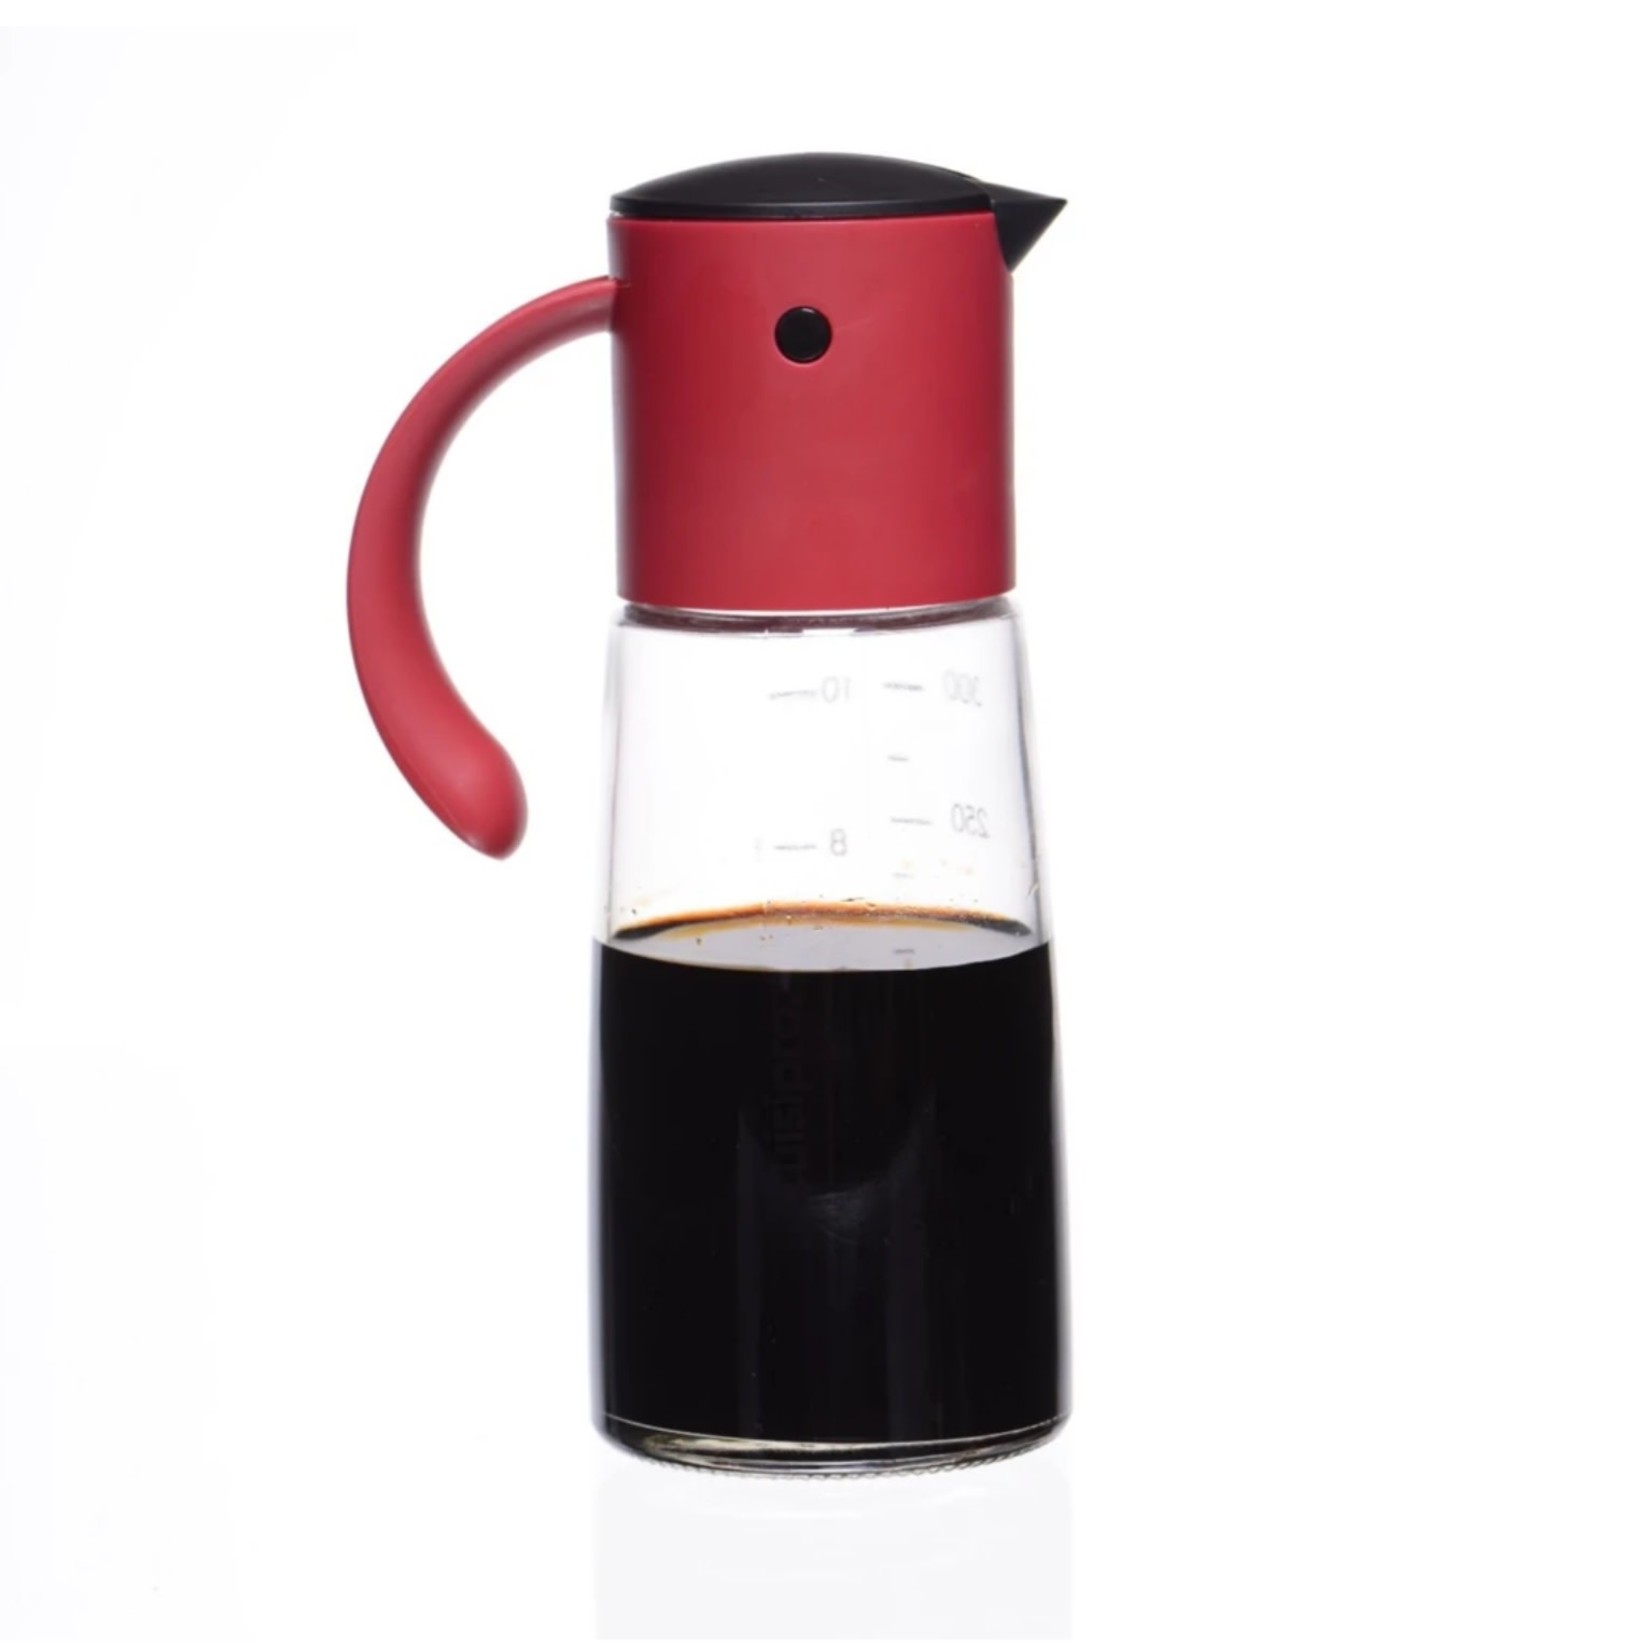 CUISIPRO CUISIPRO Oil & Vinegar Dispenser 300ml - Red